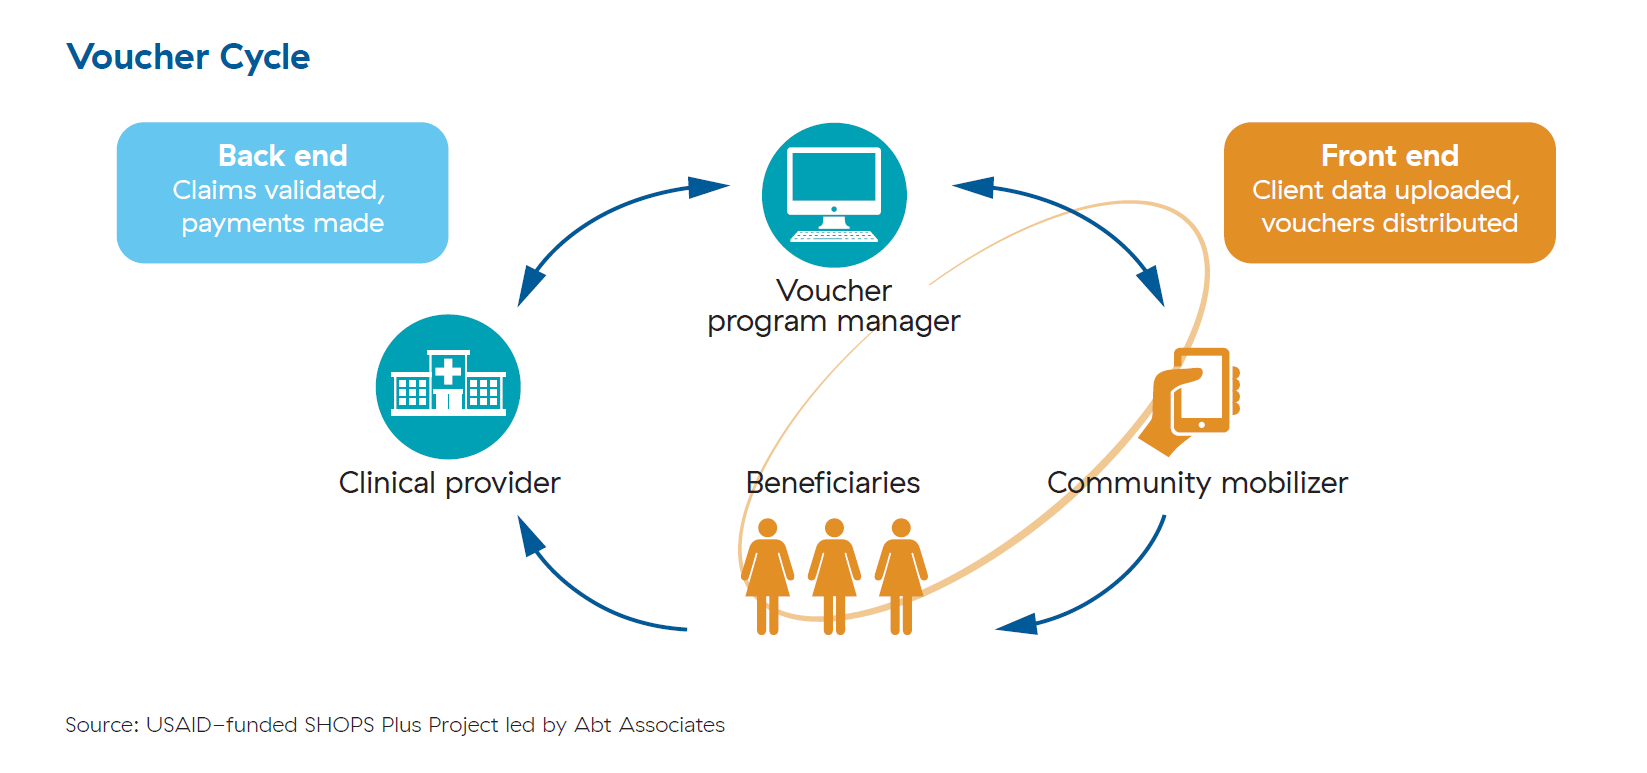 A cyclical process diagram has arrows that connect 4 individuals critical to voucher programs. 